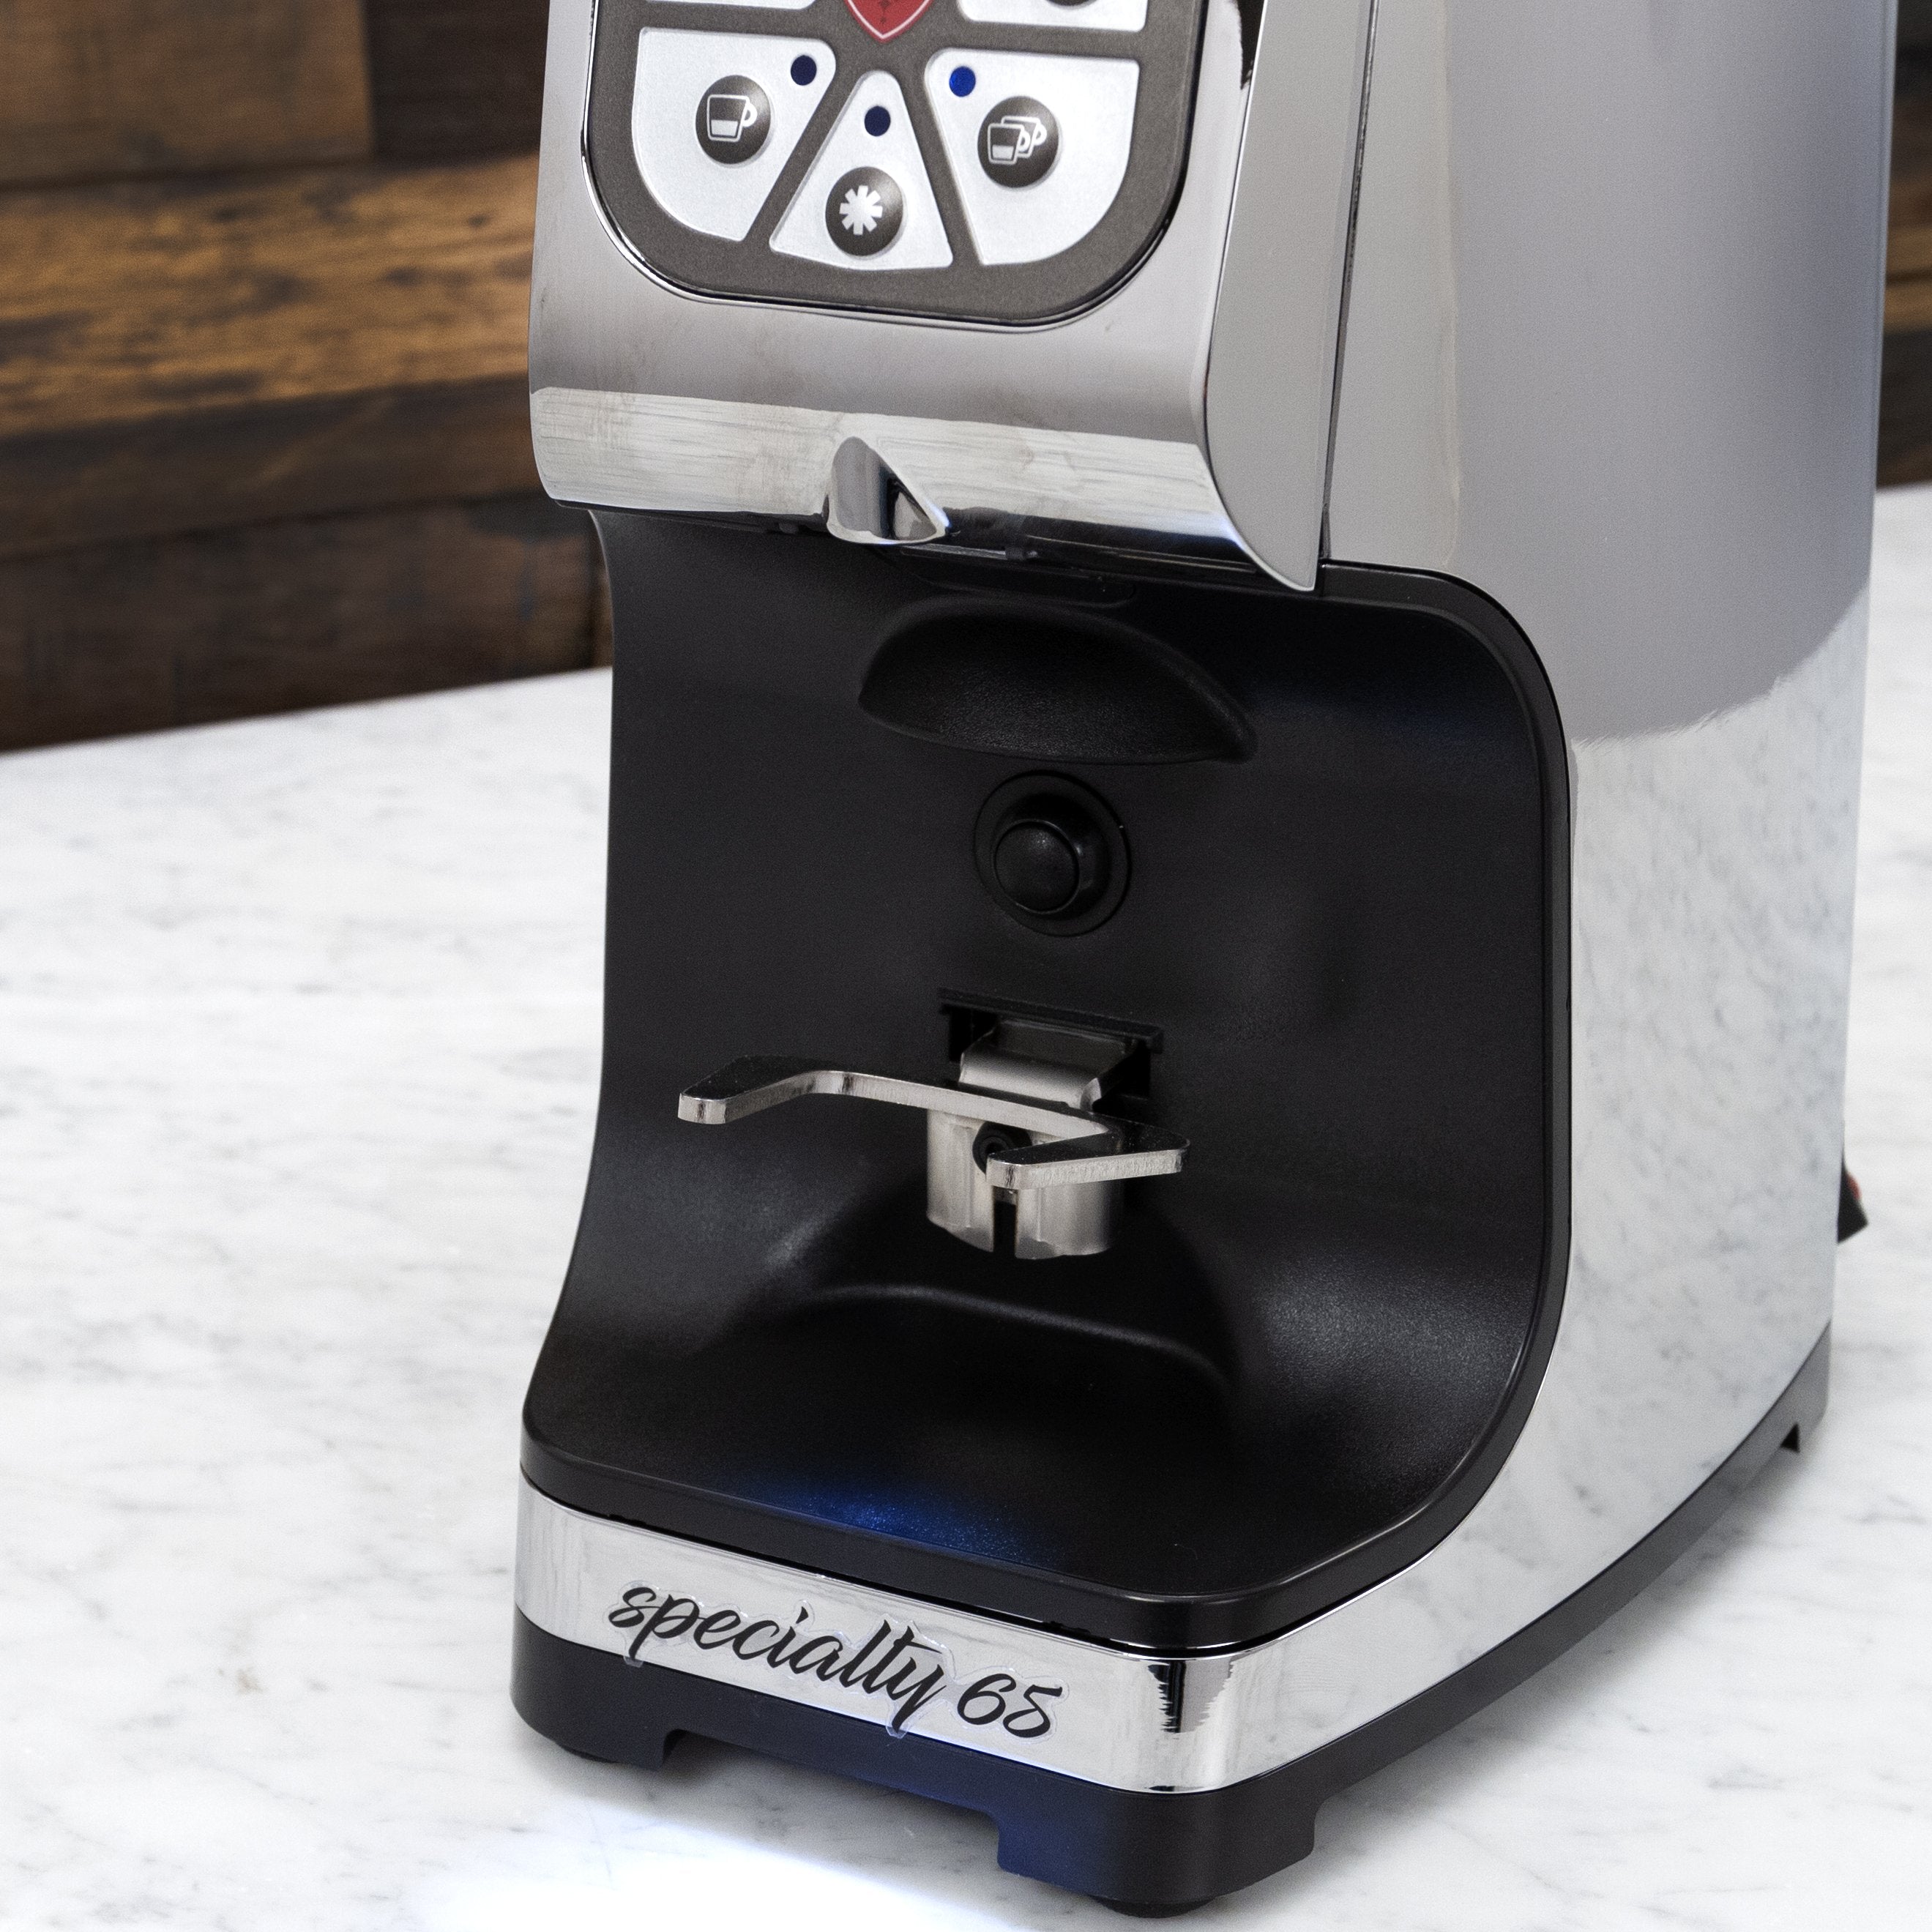 Eureka Atom Specialty 65 Espresso Grinder in Chrome – Whole Latte 